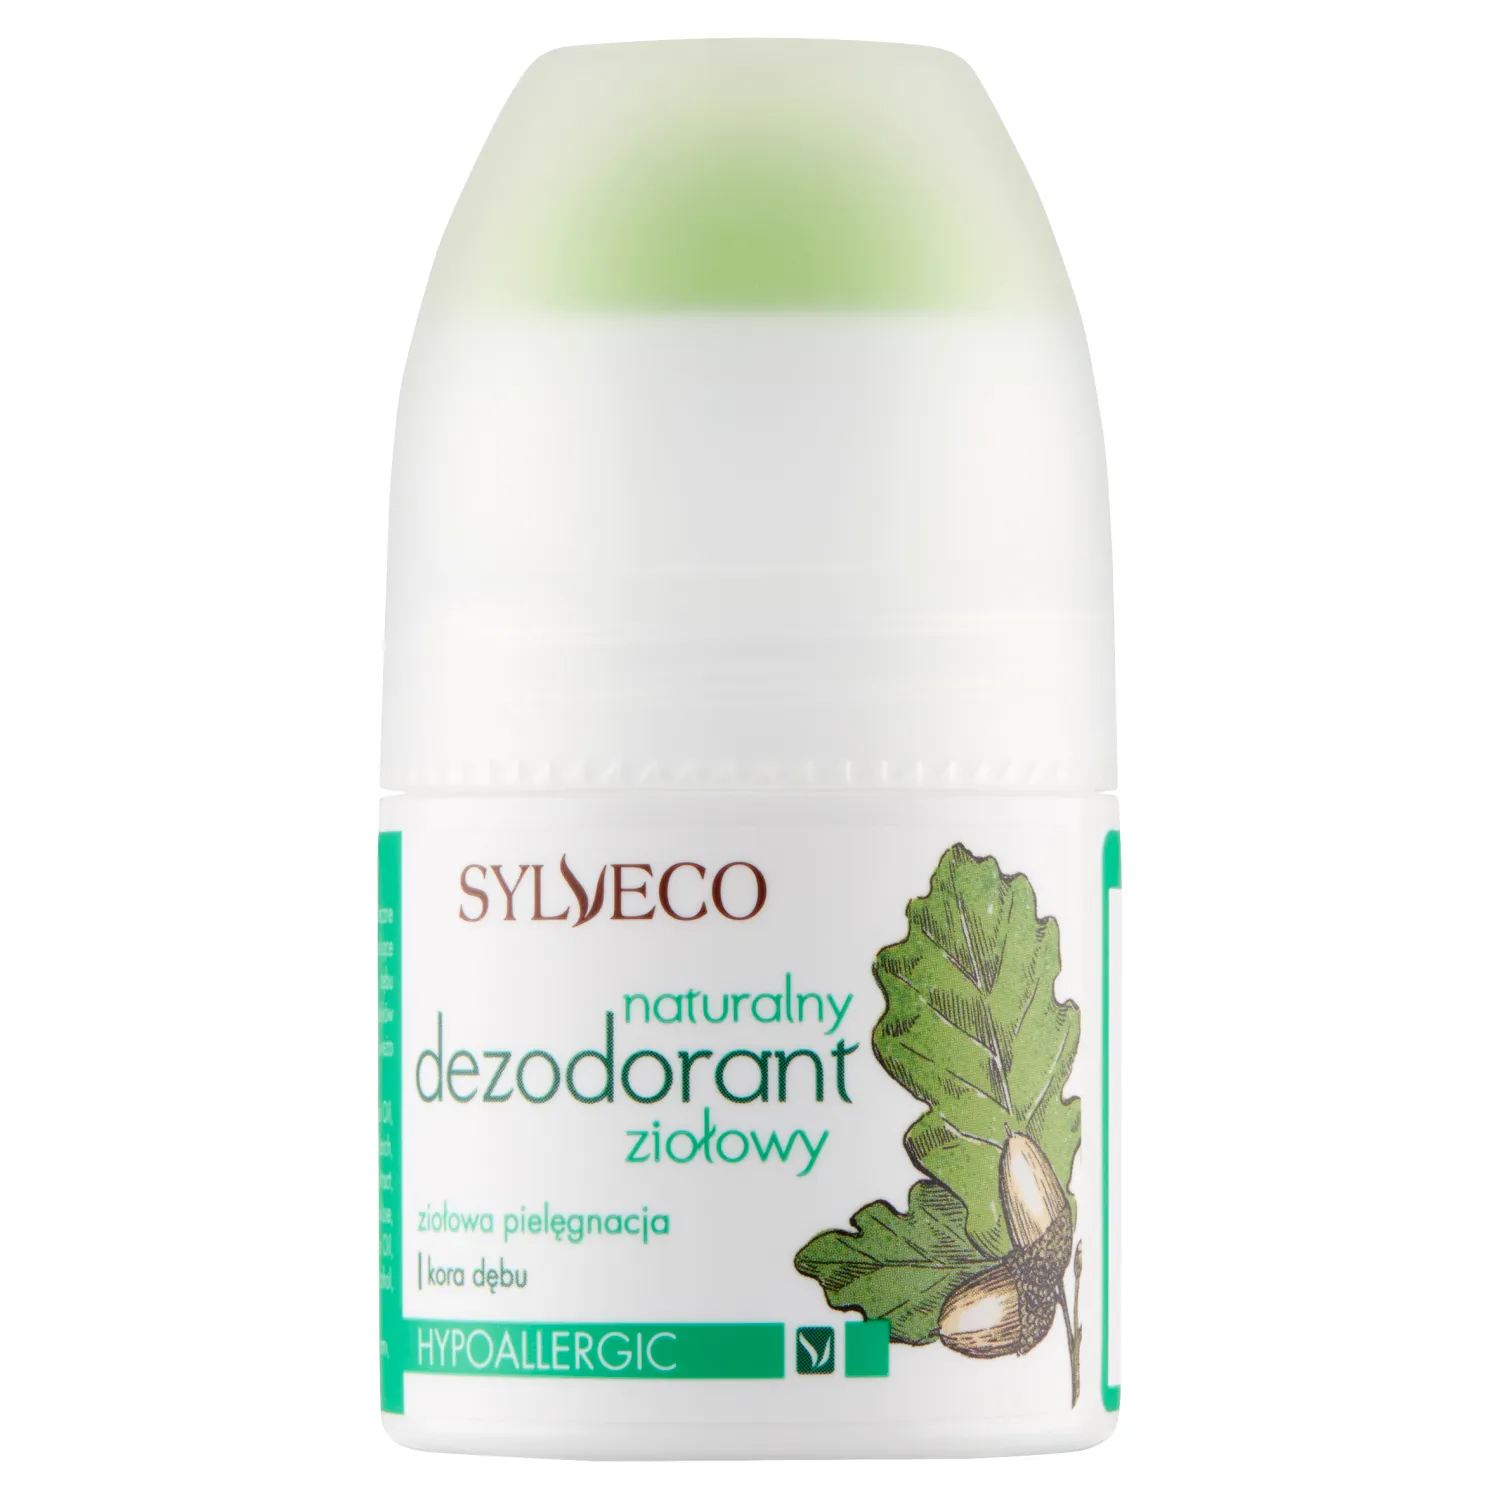 Sylveco, dezodorant naturalny ziołowy, roll-on, 50 ml